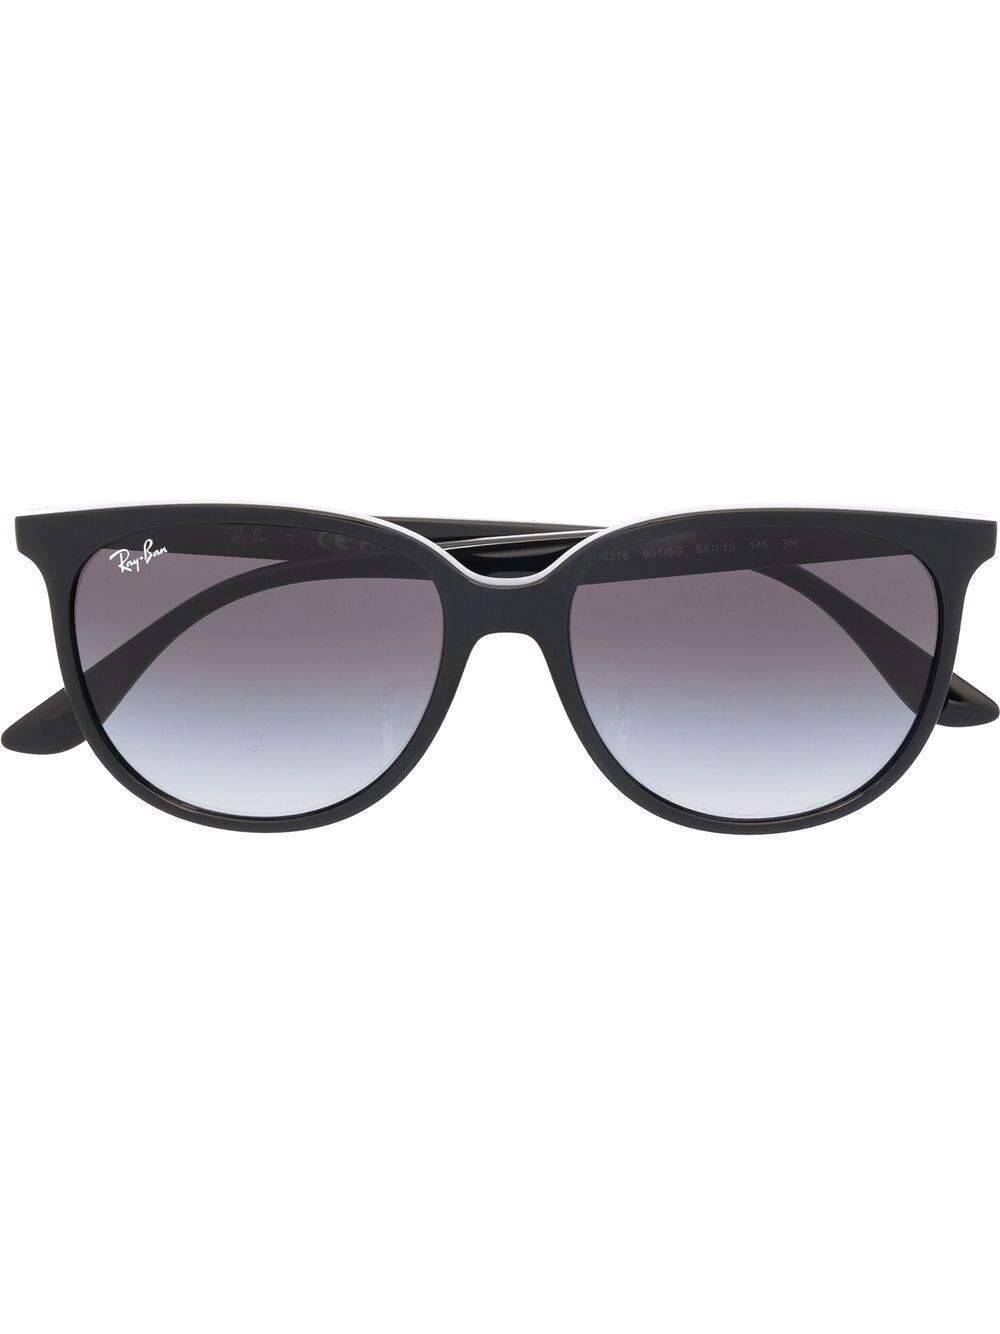 Ray-Ban square-frame sunglasses - Black